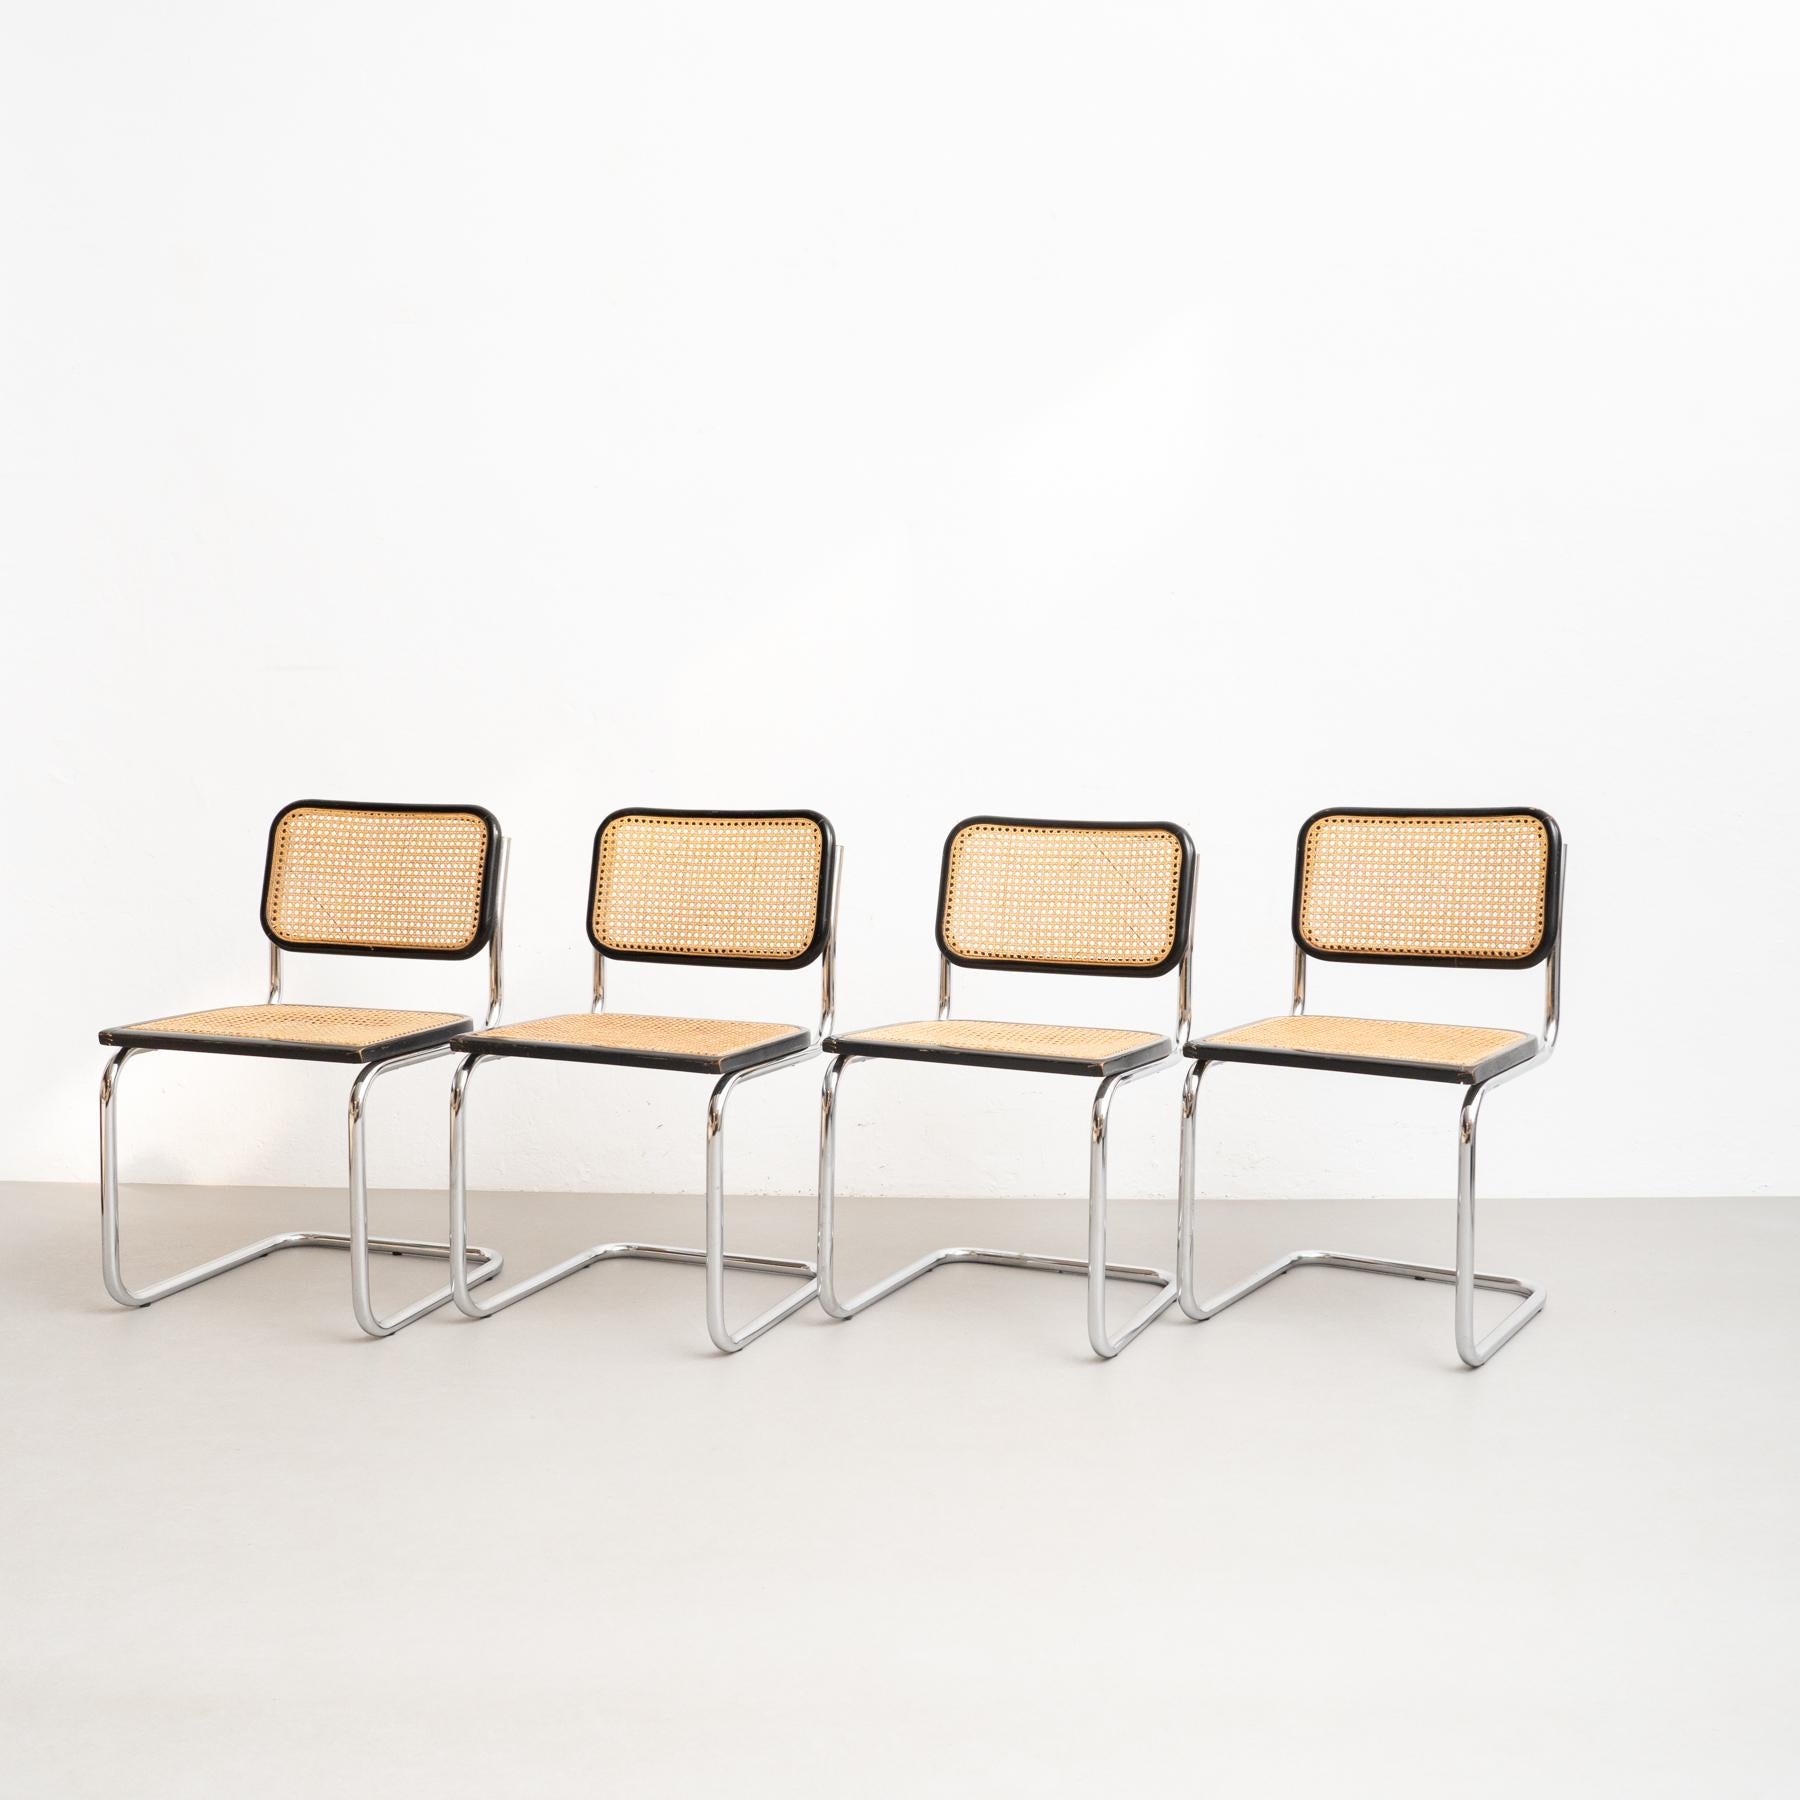 Italian Set of 4 Marcel Breuer Cesca Chairs by Gavina, circa 1960